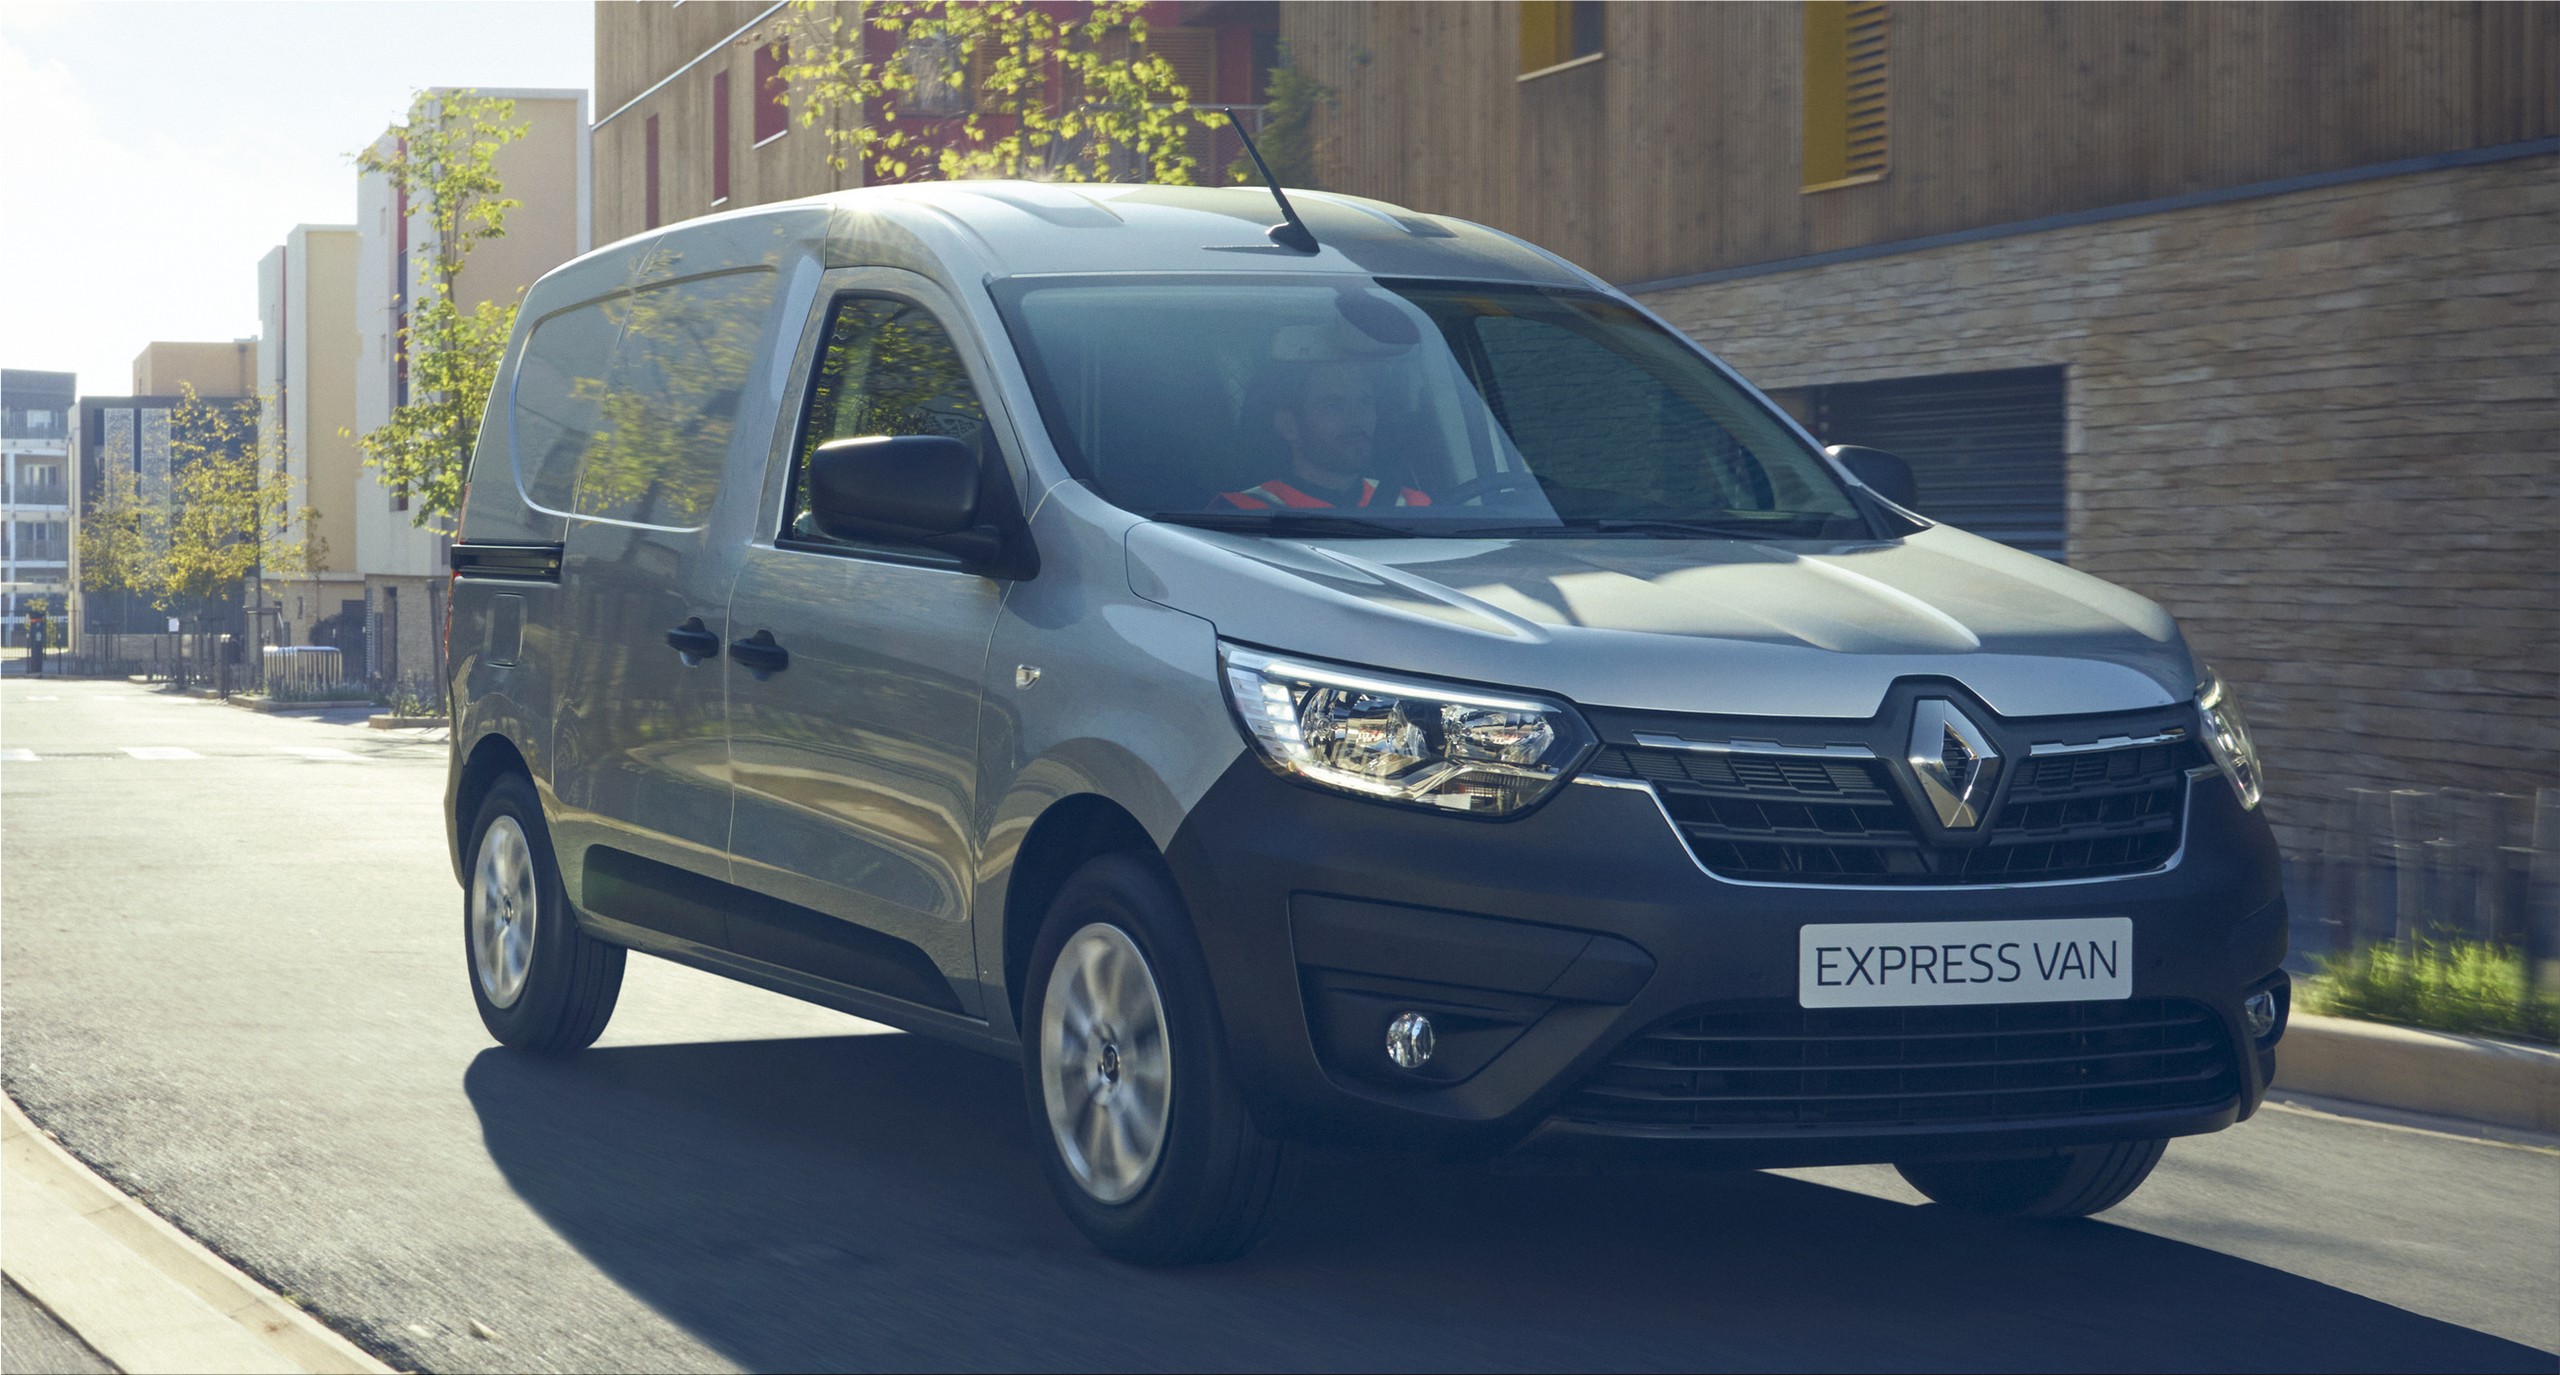 Dacia Dokker has become Renault Express Van Car